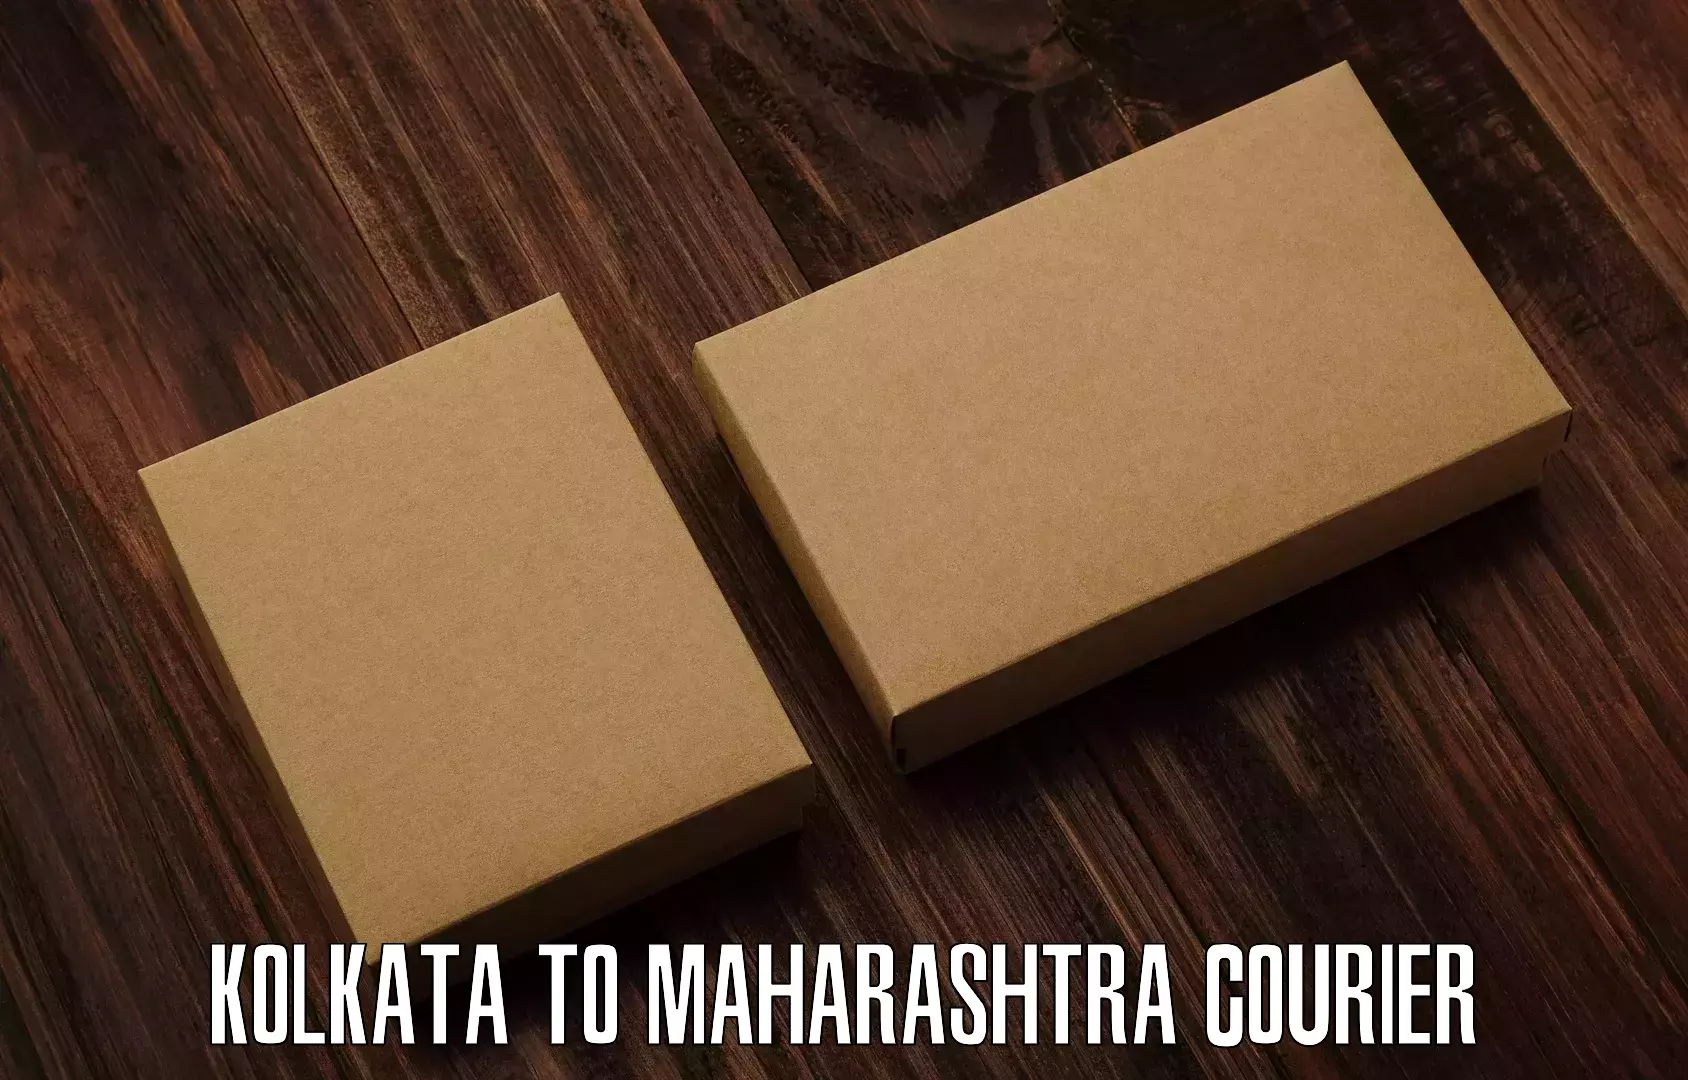 Courier service partnerships in Kolkata to Ahmednagar